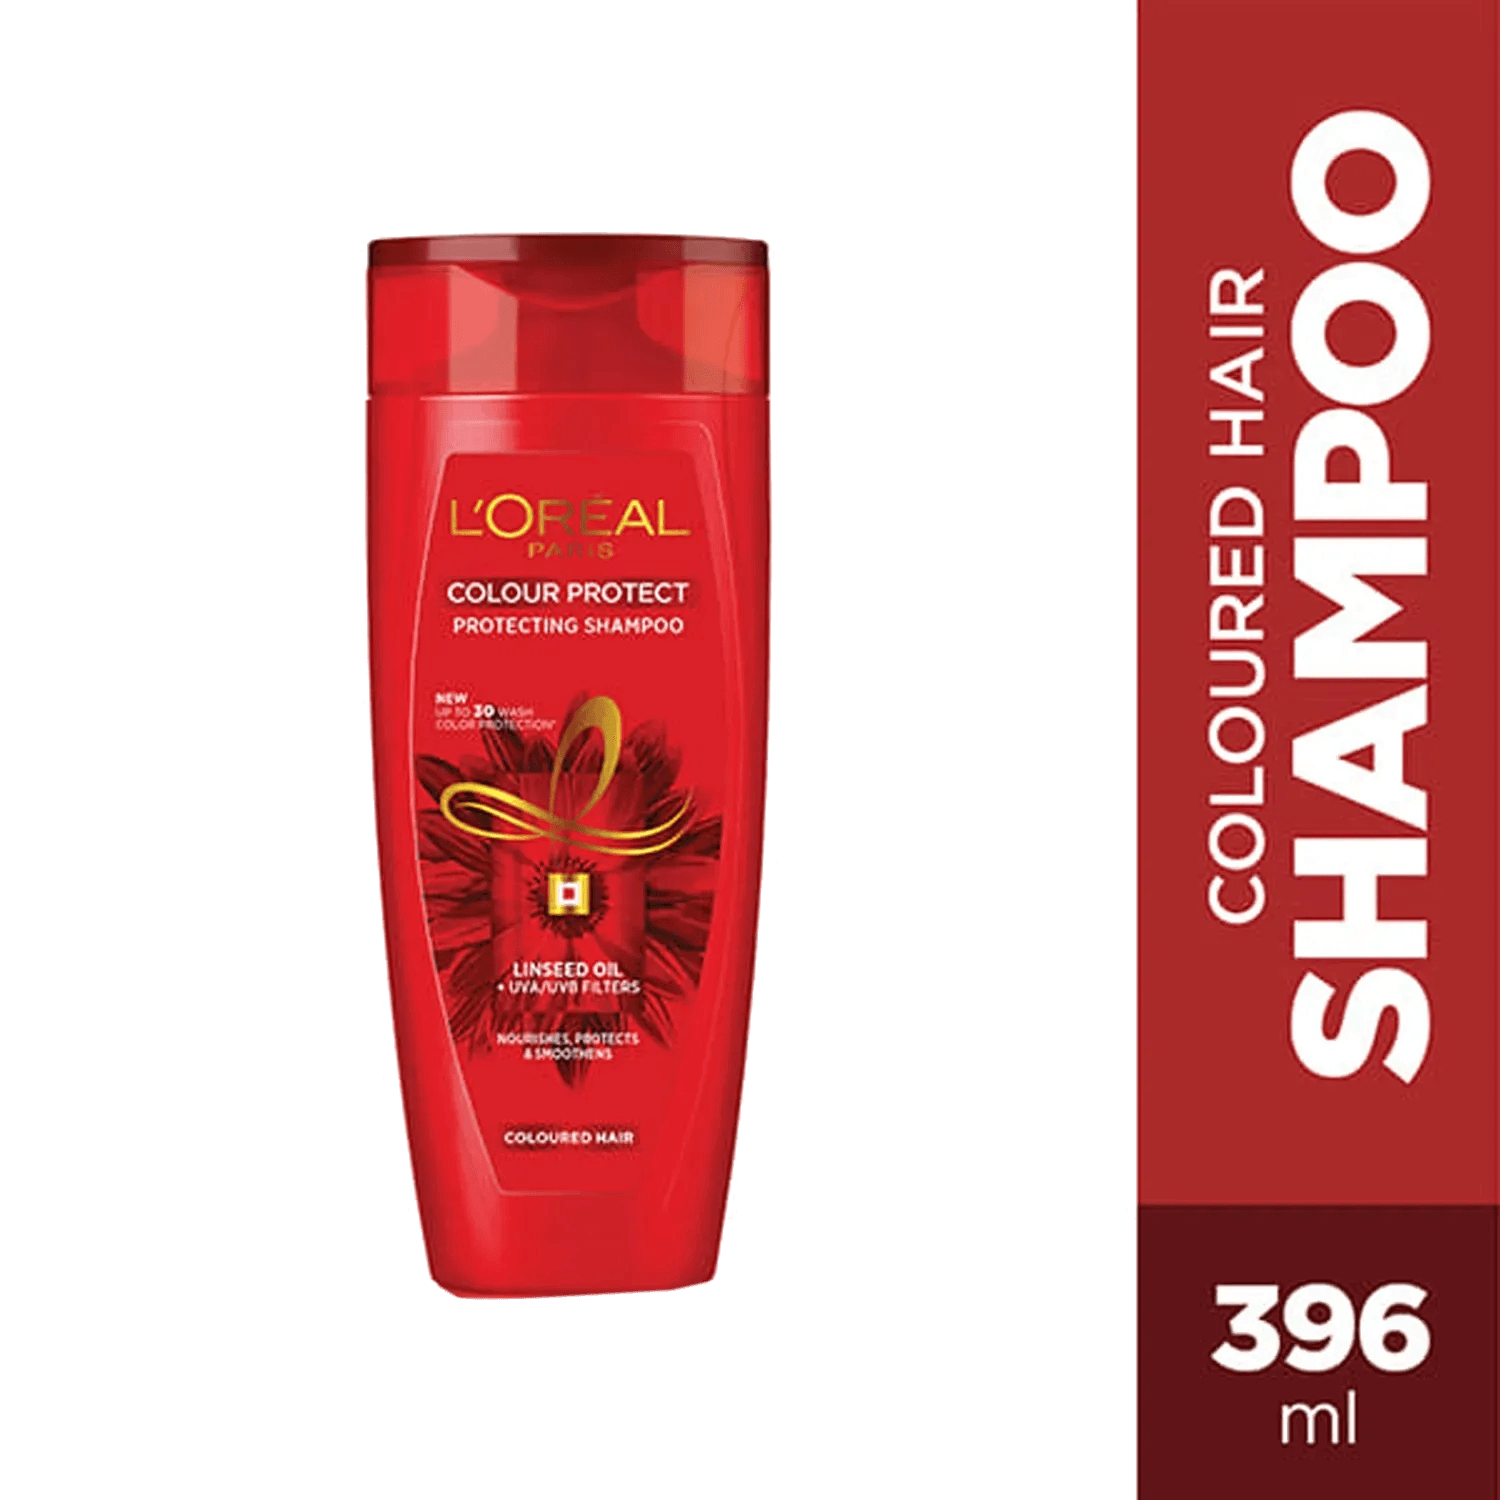 L'Oreal Paris | L'Oreal Paris Color Protect Shampoo, 396 ml